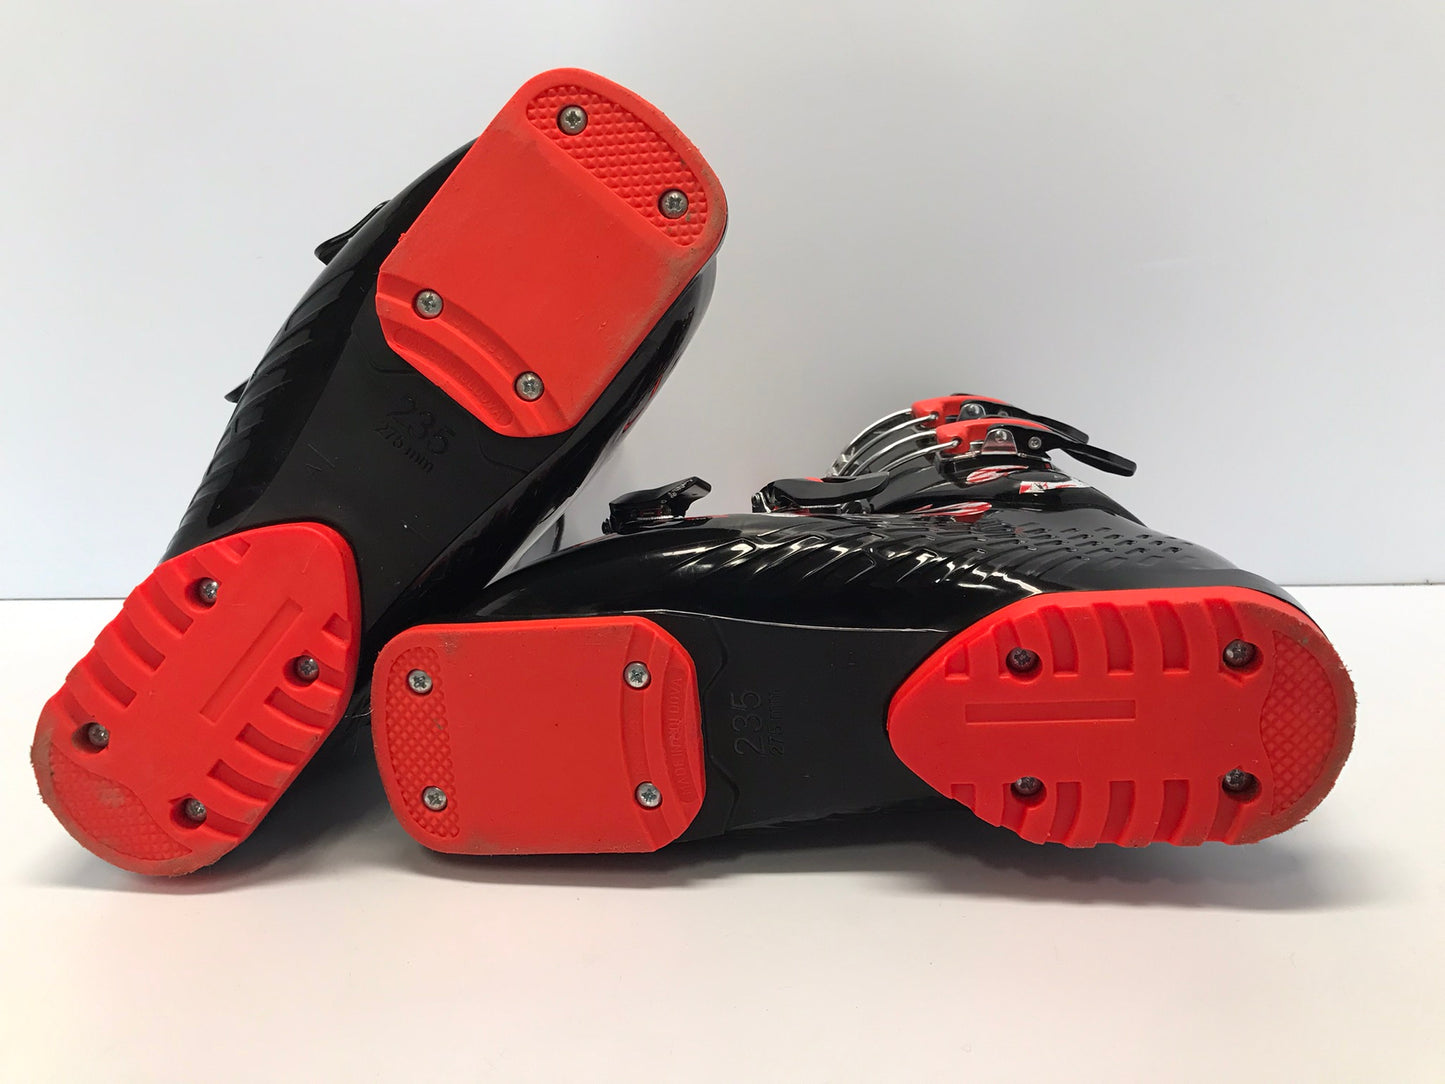 Ski Boots Mondo Size 23.5 Men's Size 5 Ladies Size 6 275 mm Rossignol Black Orange New Demo Model